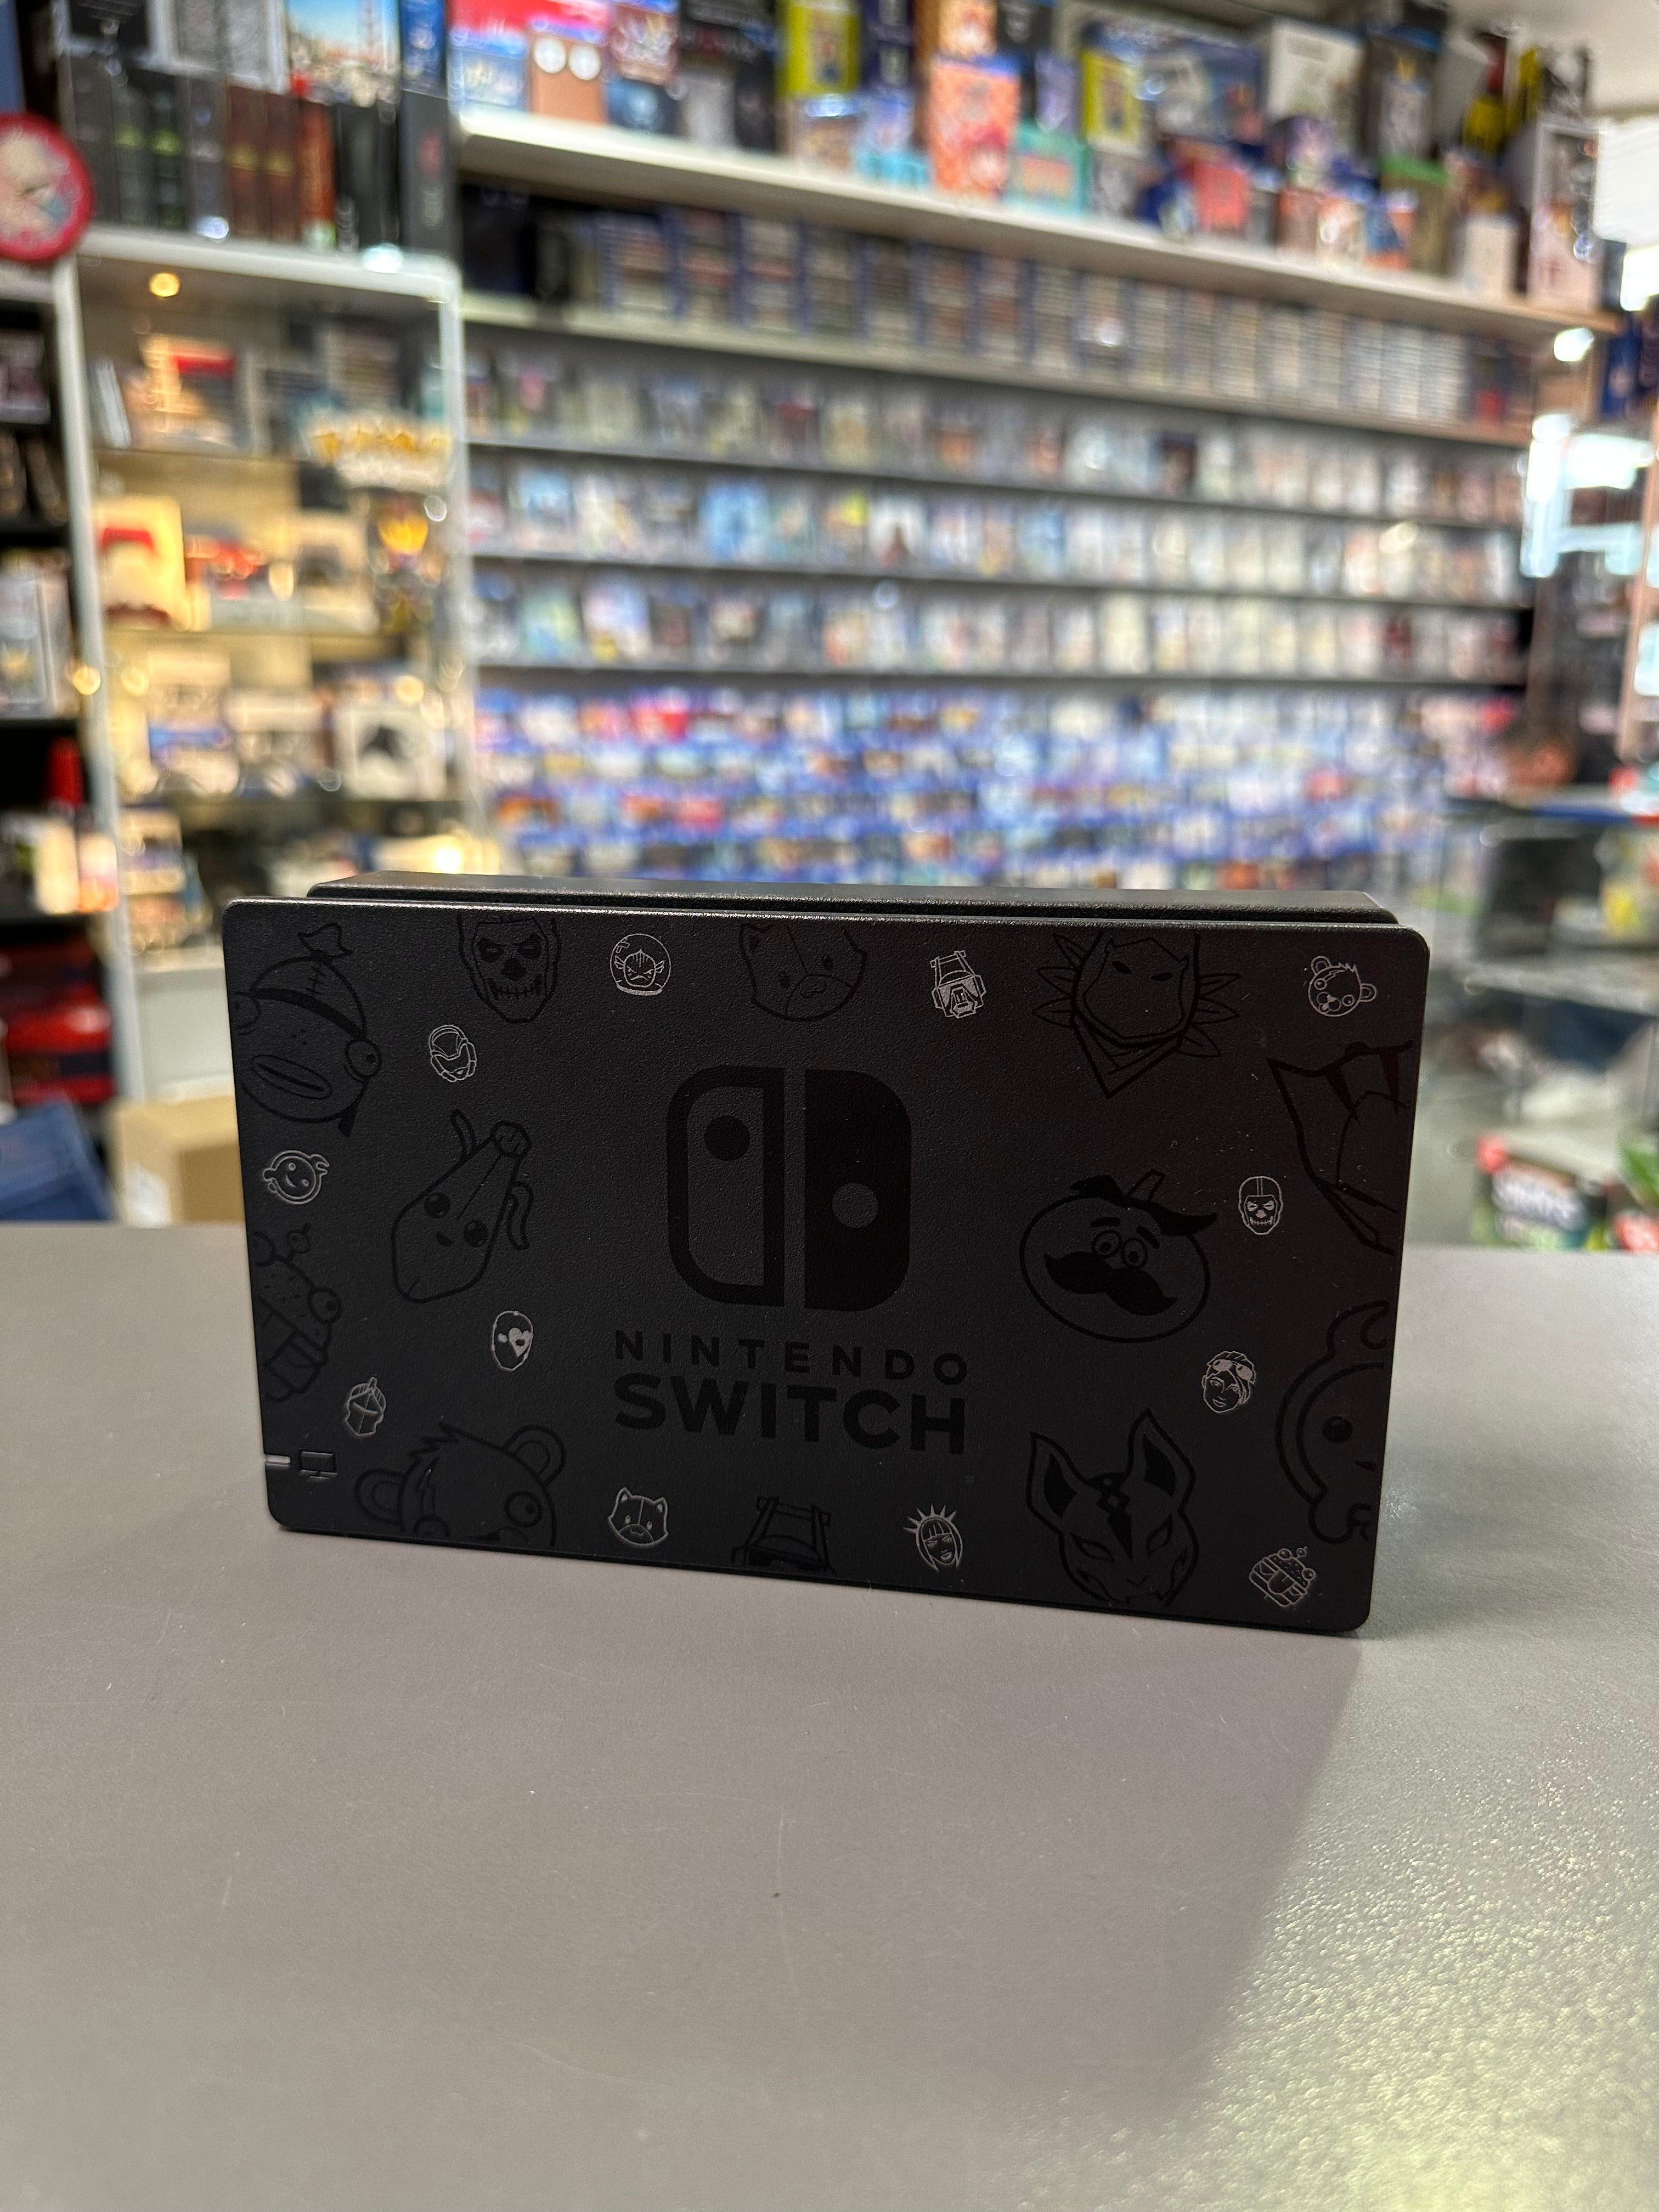 Nintendo Switch Docking Station Fortnite Edition